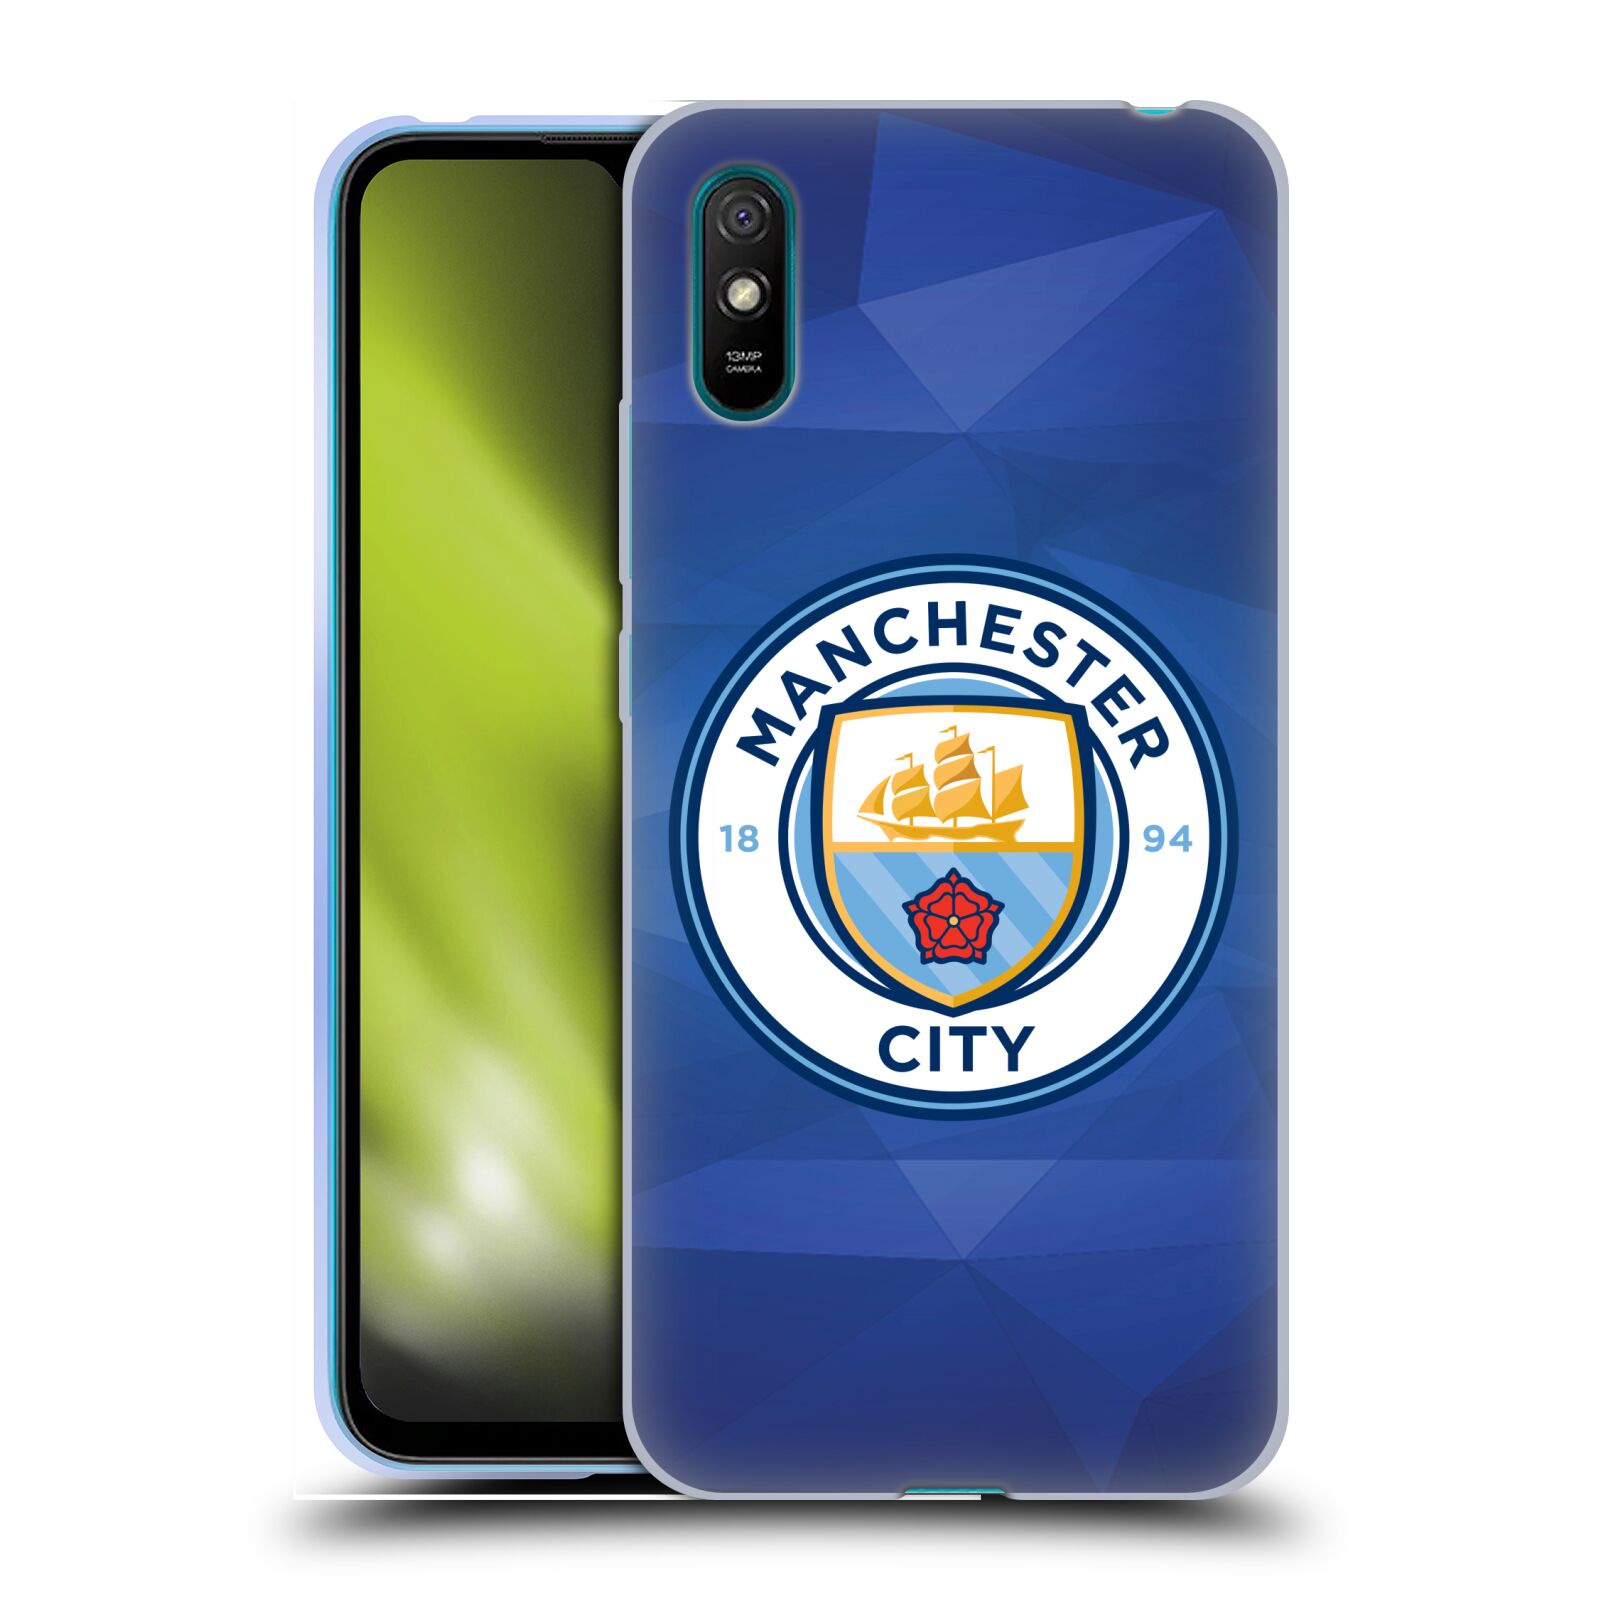 Silikonové pouzdro na mobil Xiaomi Redmi 9A / 9AT - Head Case - Manchester City FC - Modré nové logo (Silikonový kryt, obal, pouzdro na mobilní telefon Xiaomi Redmi 9A / Xiaomi Redmi 9AT s motivem Manchester City FC - Modré nové logo)